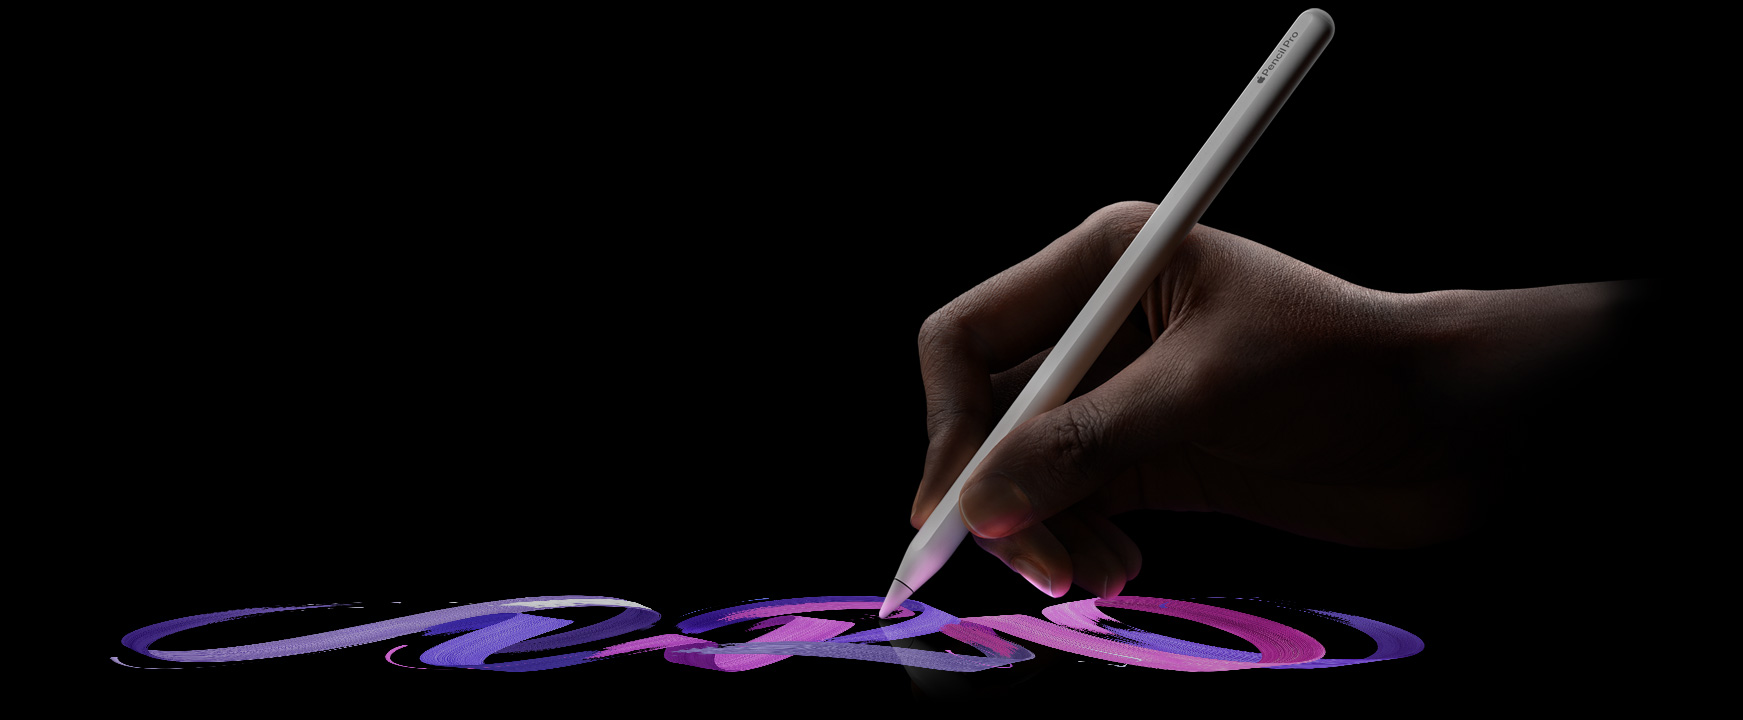 Apple Pencil Pro를 쥔 손이 브러시로 생동감 있는 선을 그리고 있습니다.